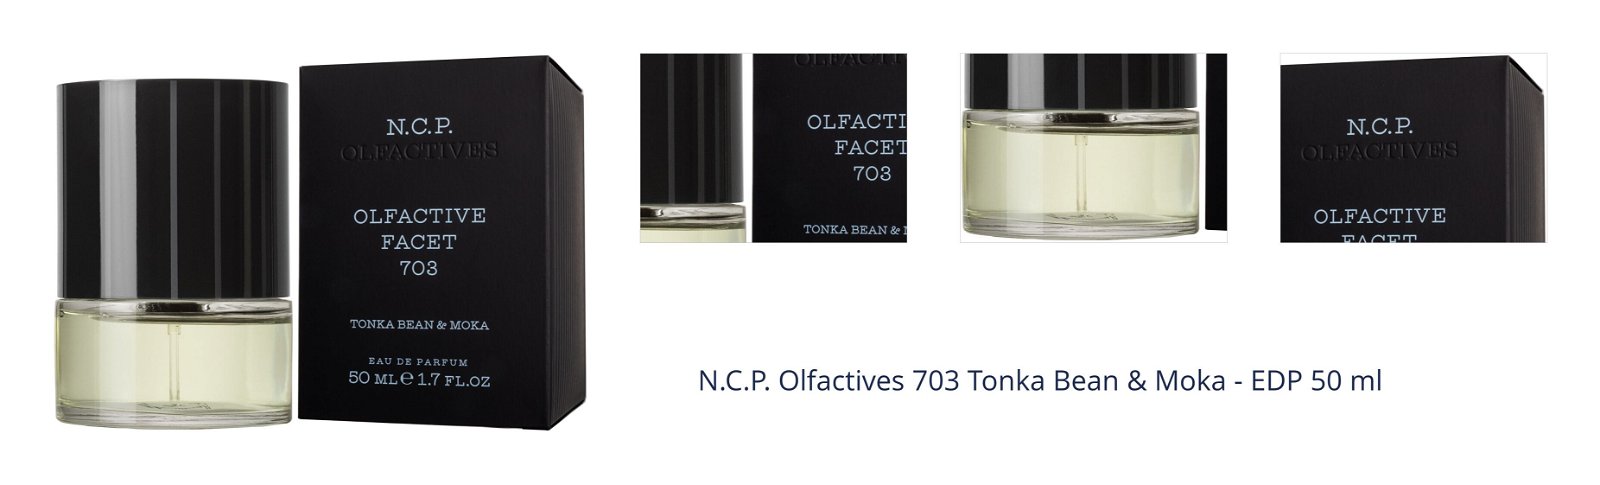 N.C.P. Olfactives 703 Tonka Bean & Moka - EDP 50 ml 7